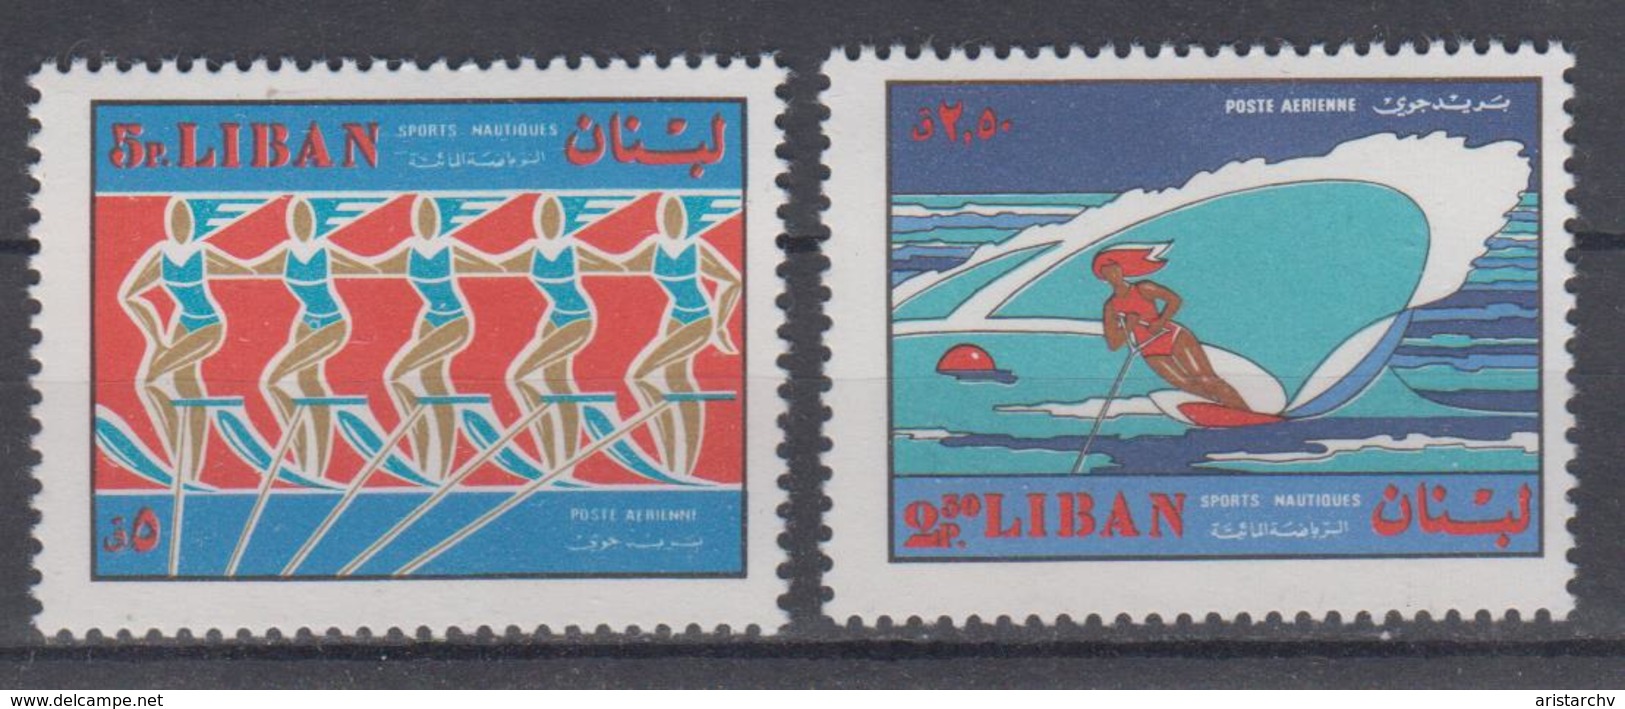 LEBANON 1969 WATER SKIING - Sci Nautico